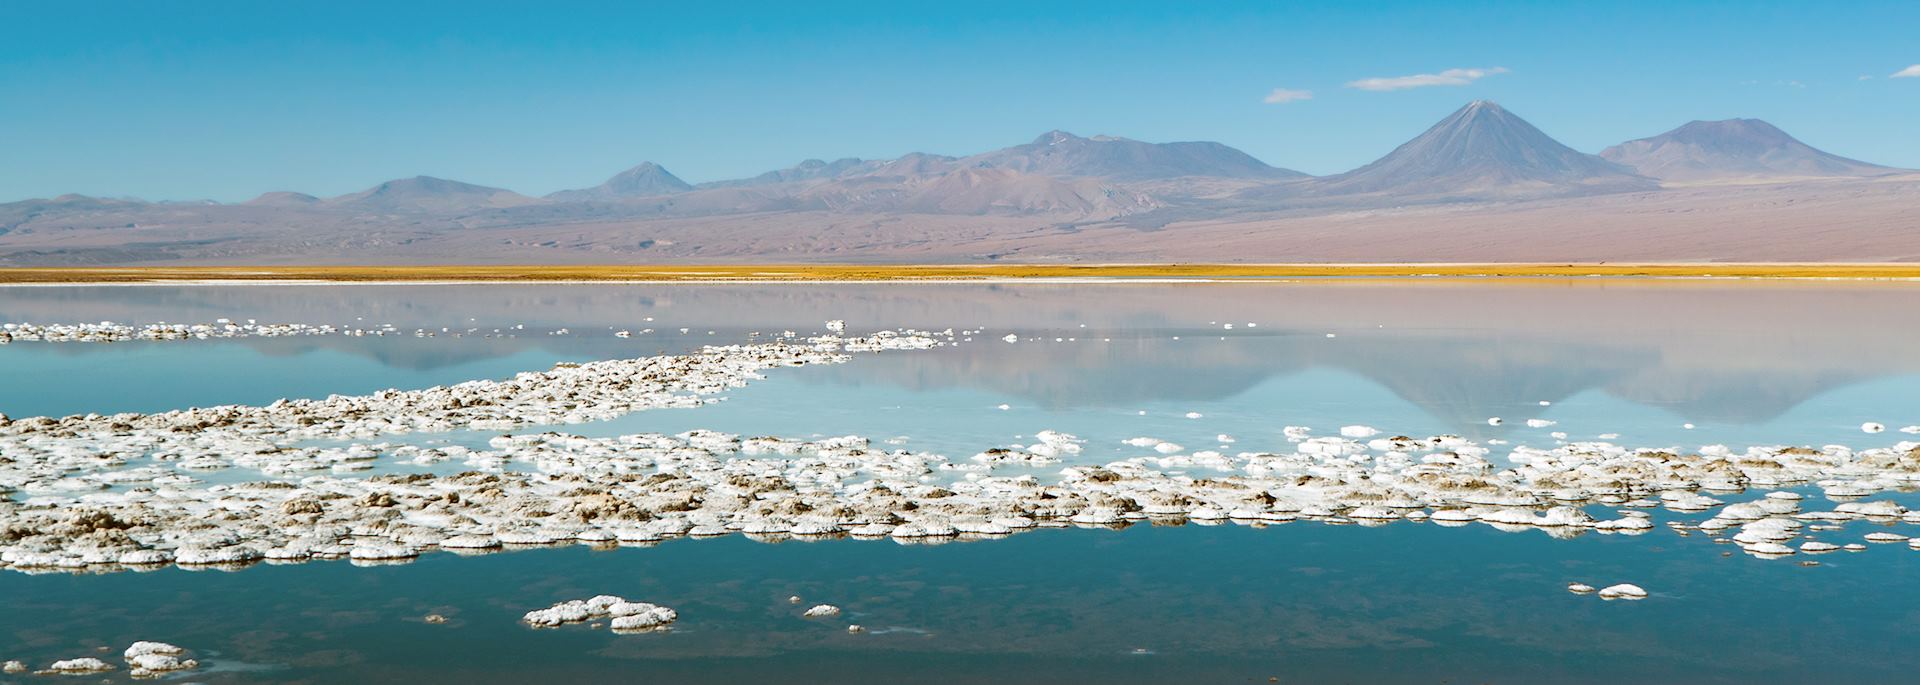 Lagoon Tebinquiche in the Atacama Desert